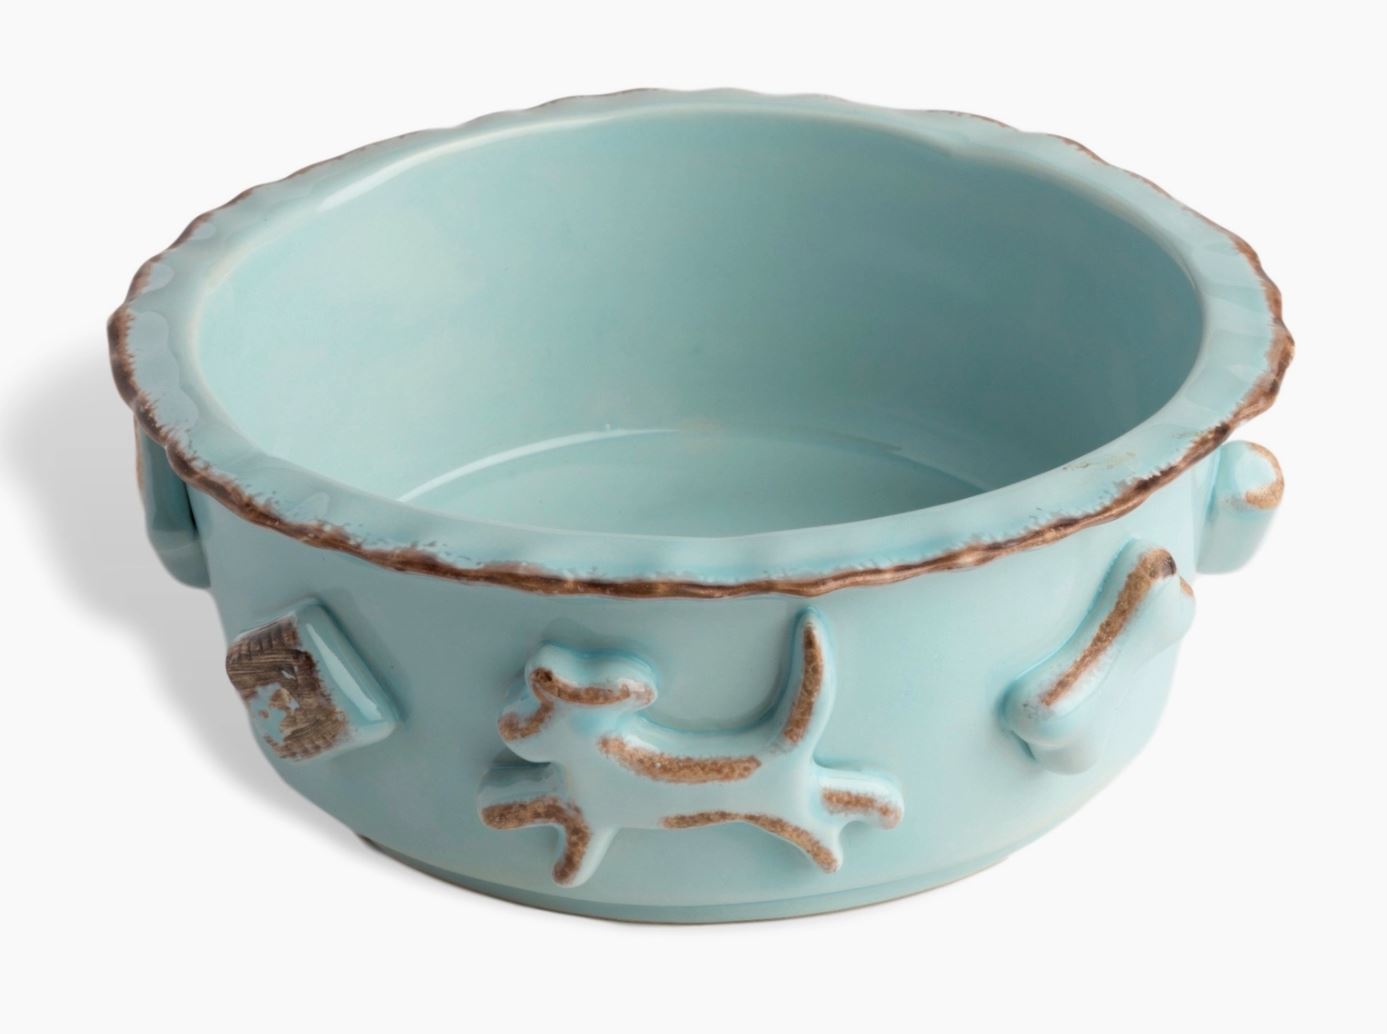 Dog Food/Water bowl - Baby Blue – Carmel Ceramica